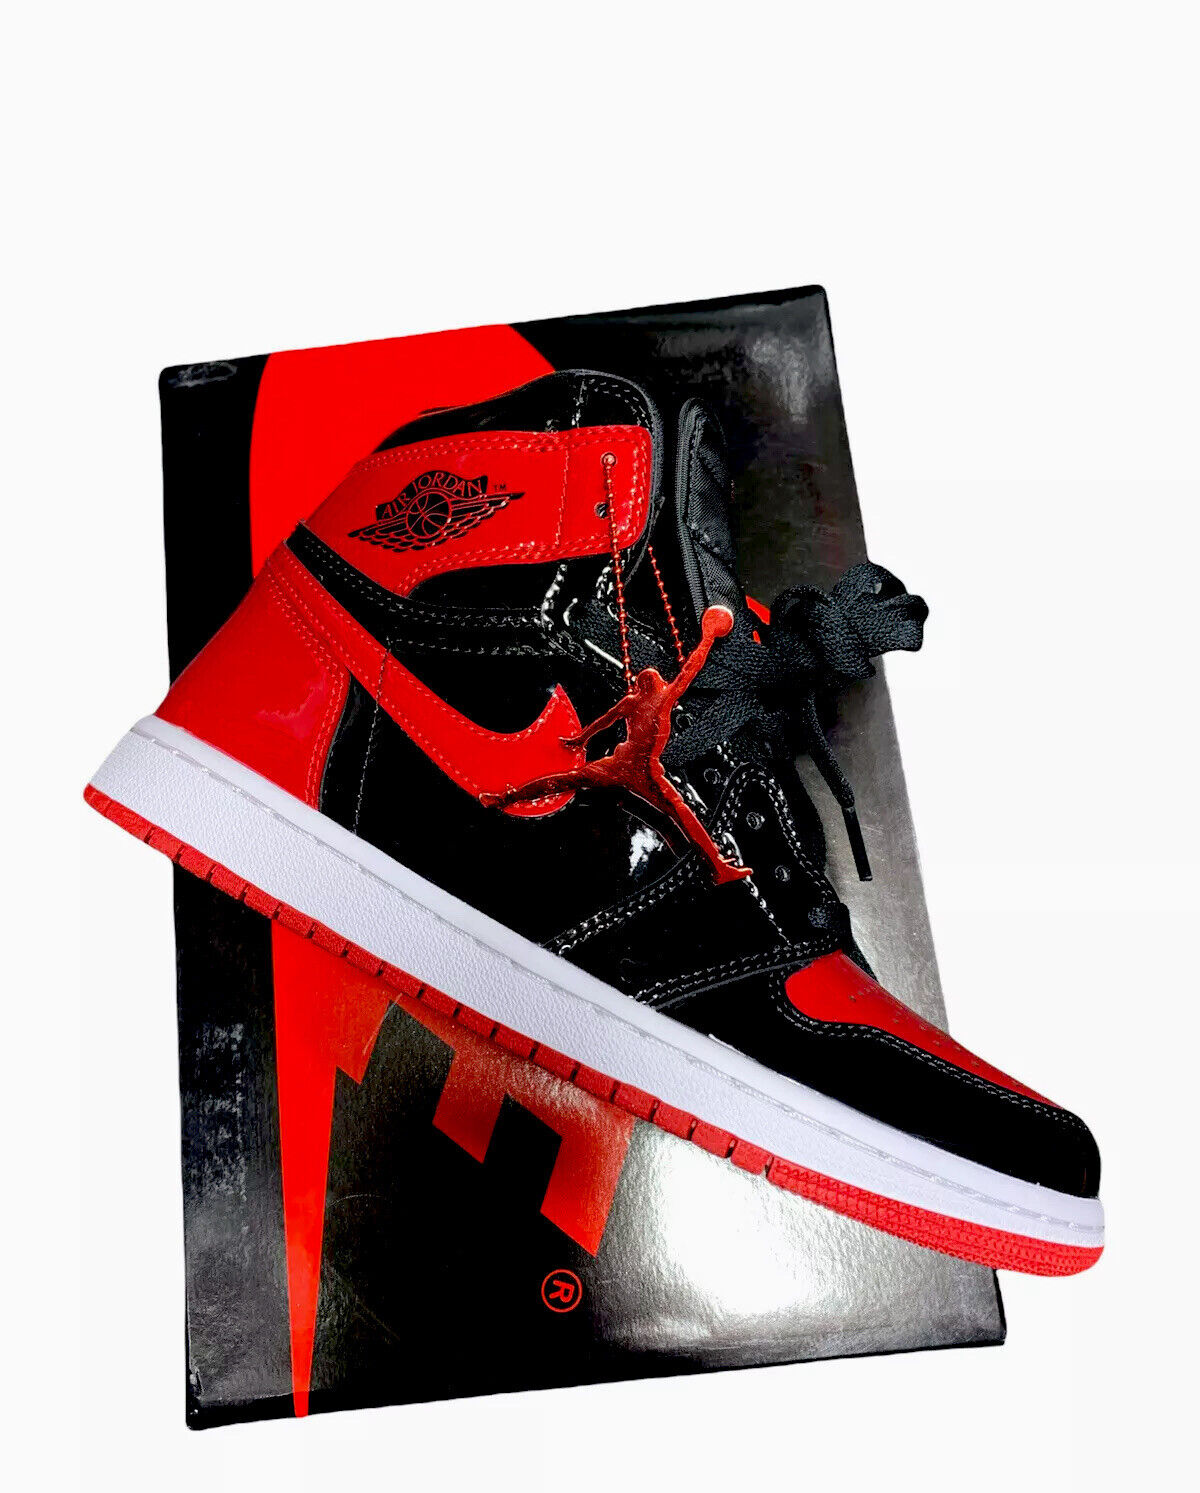 Nike Air Jordan 1 Retro High Patent Bred 555088-063 Men's  Size 7